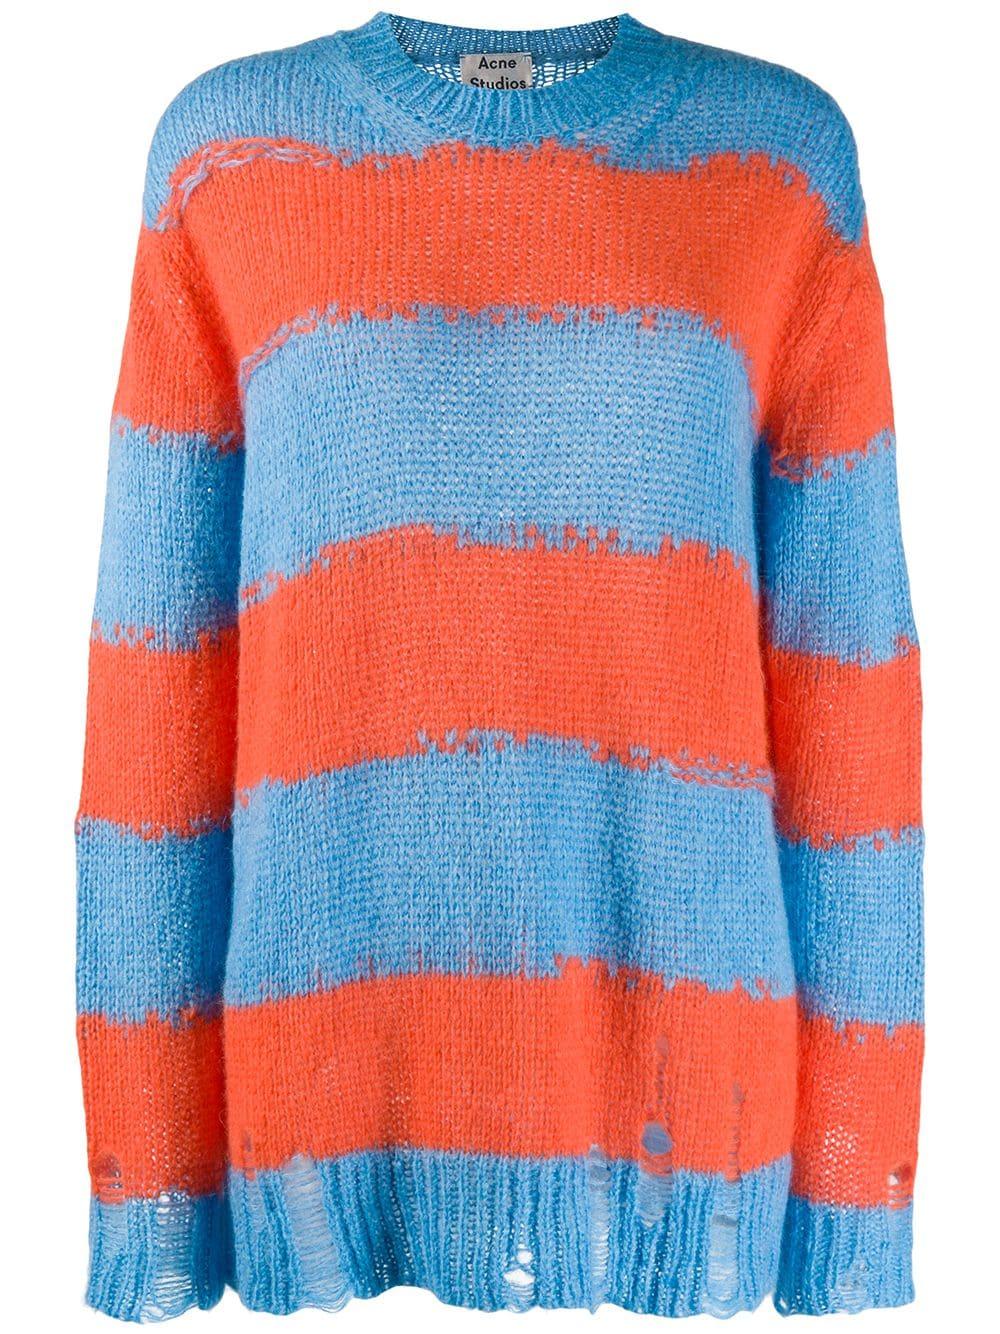 Acne Studios Distressed Striped Sweater in Blue | Lyst